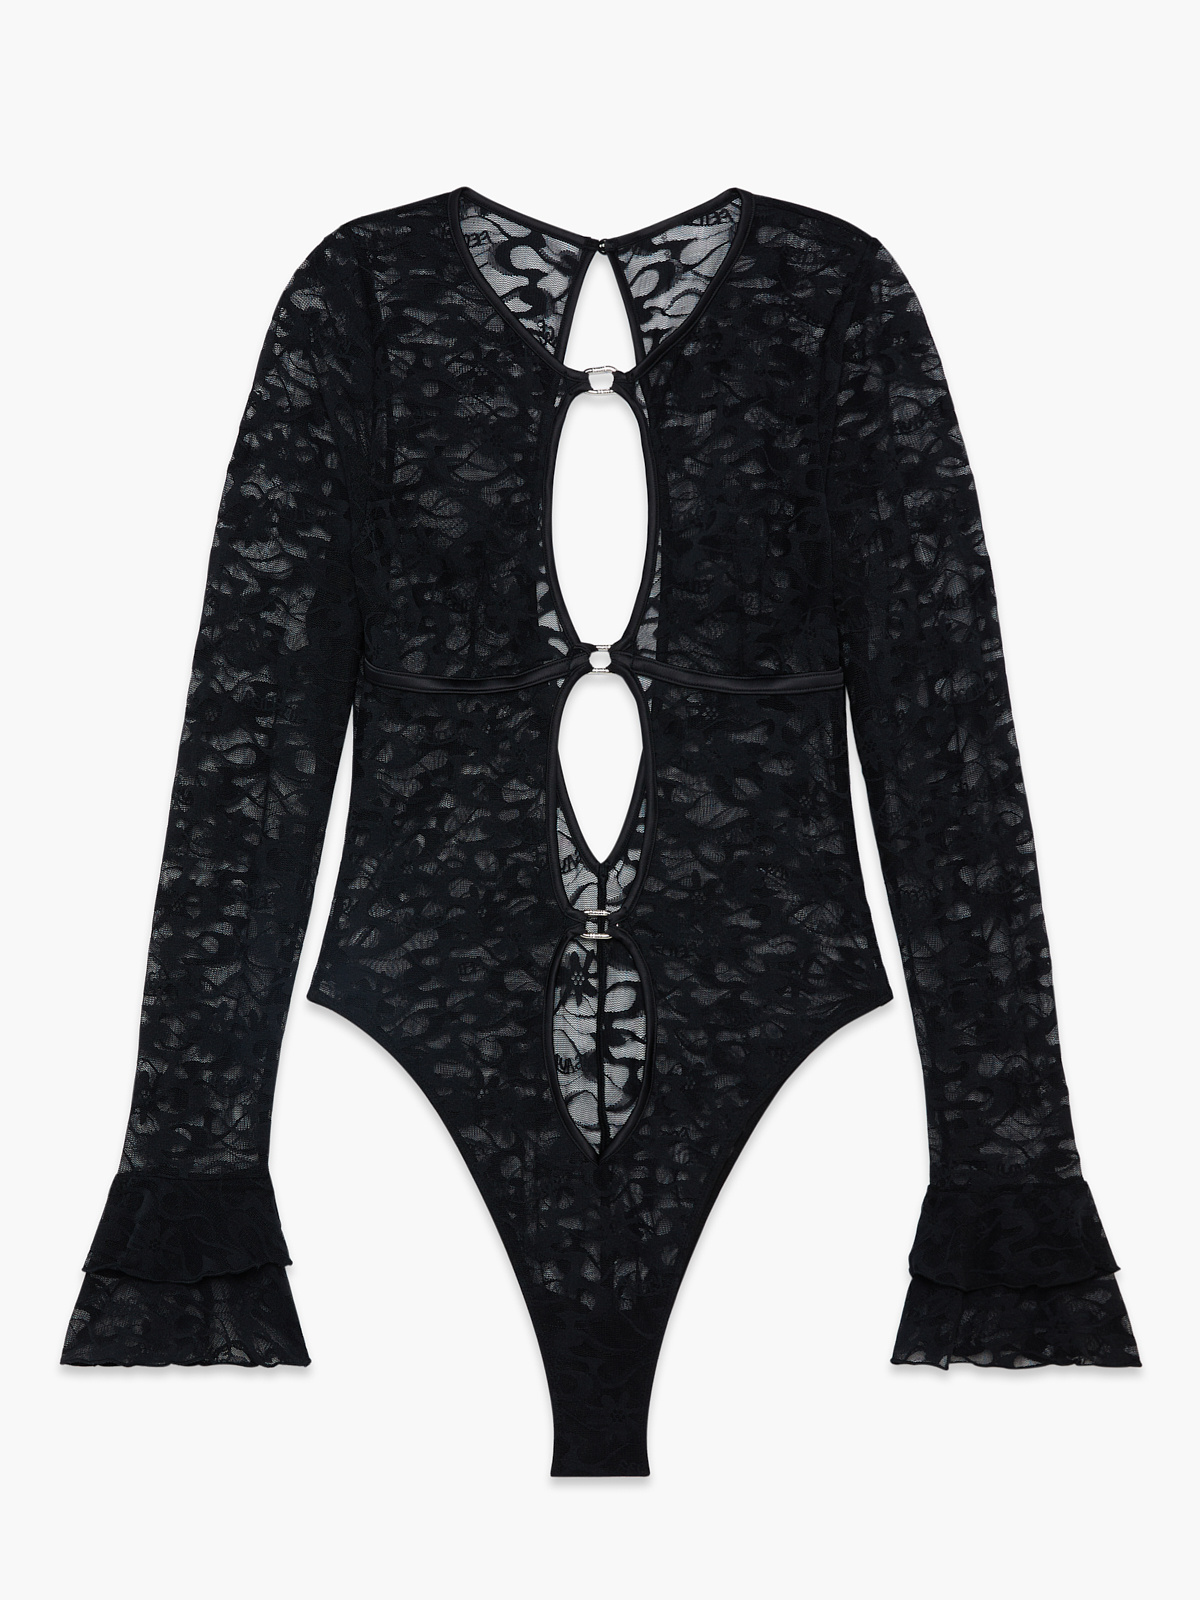 PMUYBHF Black Long Sleeve Bodysuit Lace Strap European and American Large  Size Fun Underwear